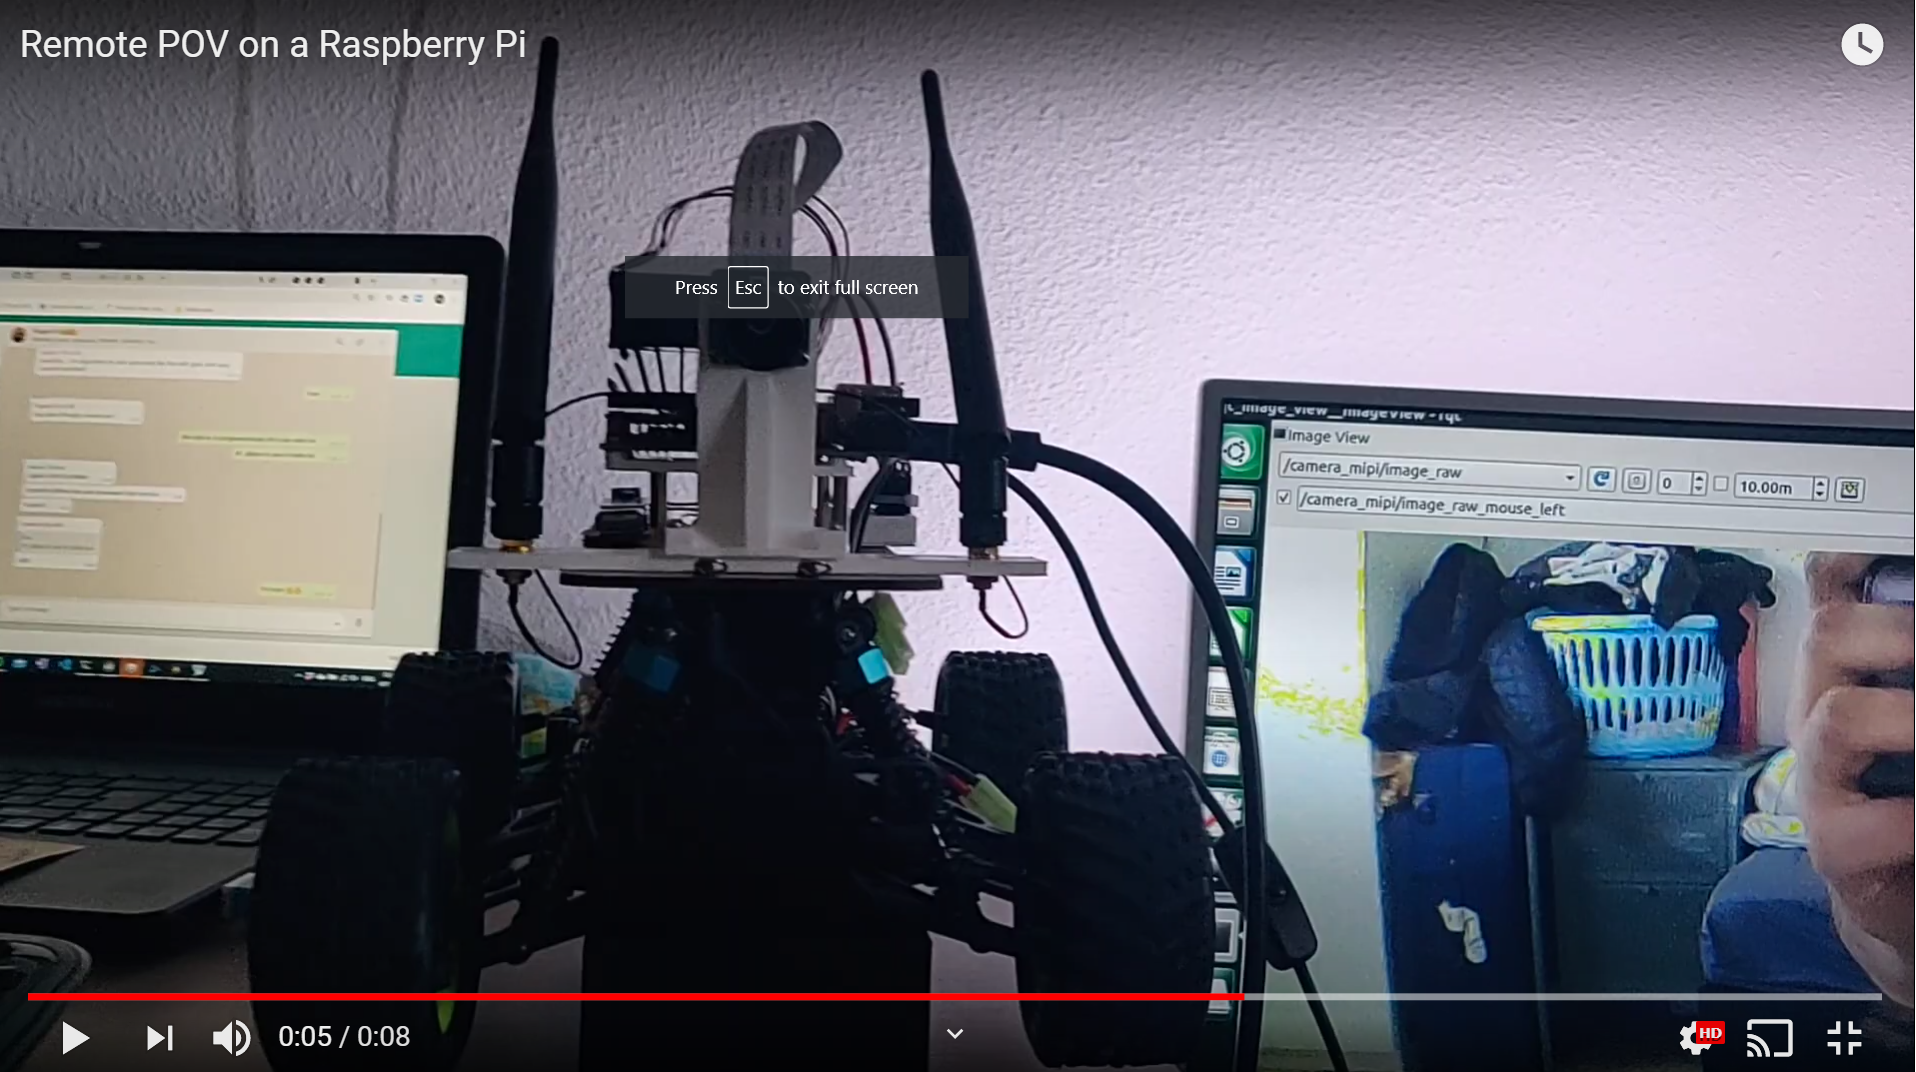 Remote POV test: Jetson Nano (Camera source) and Raspberry Pi (Display)